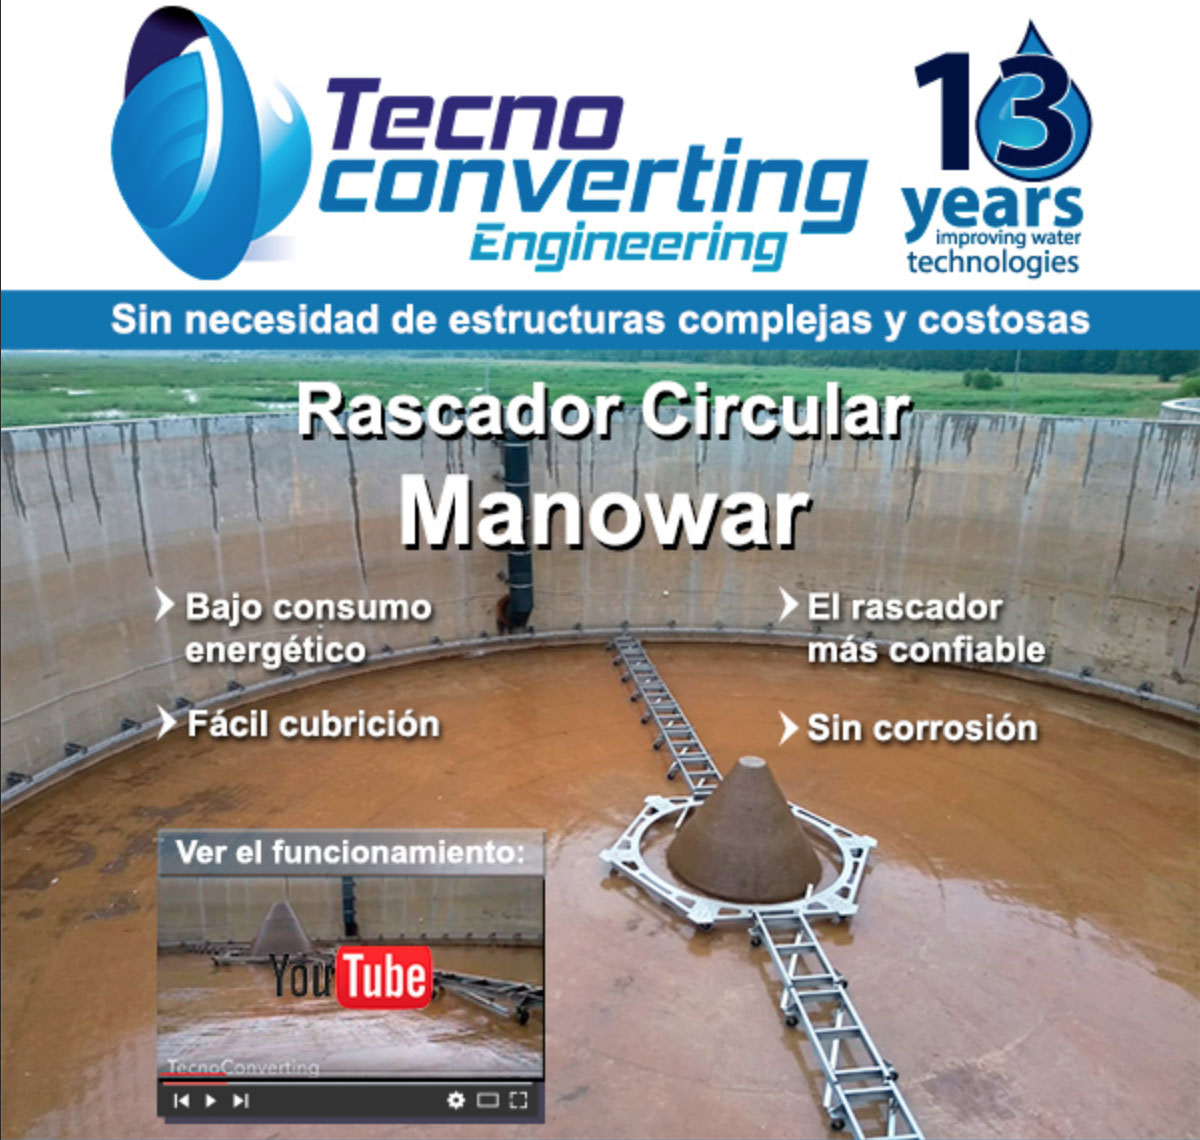 Rascador Circular Manowar, TecnoConverting-Engineering